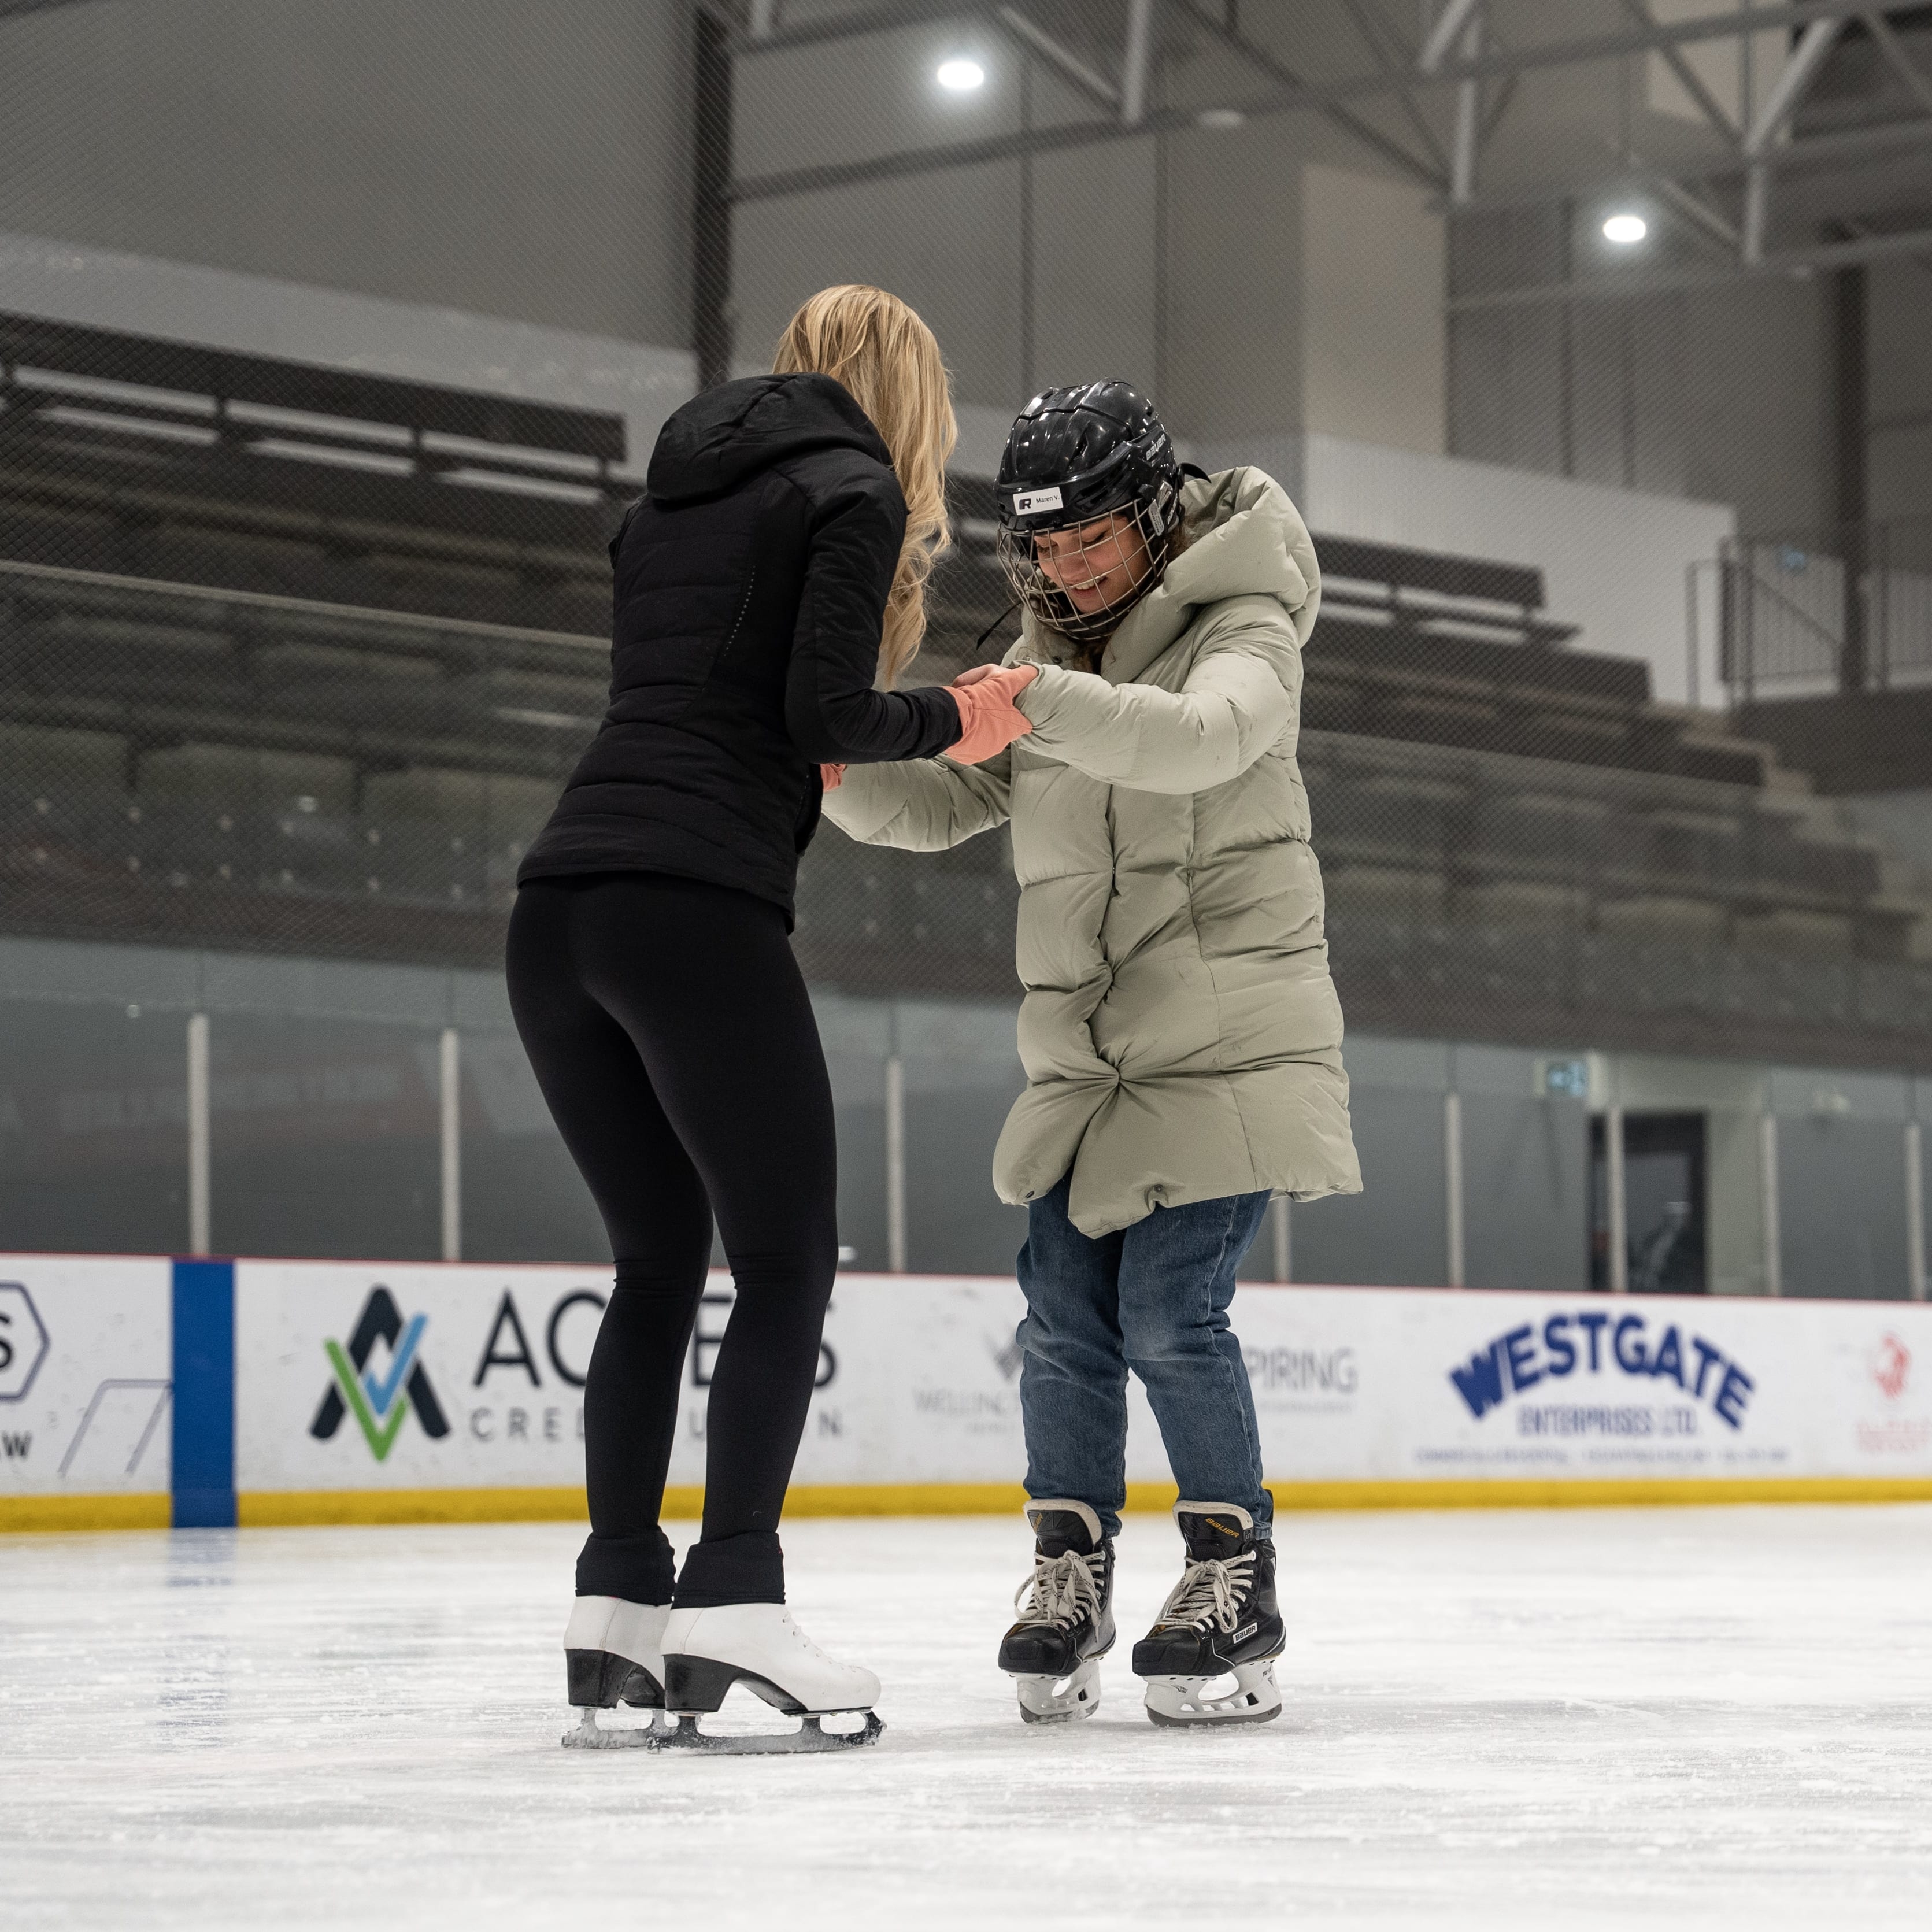 Hockey Skate Adult Lessons